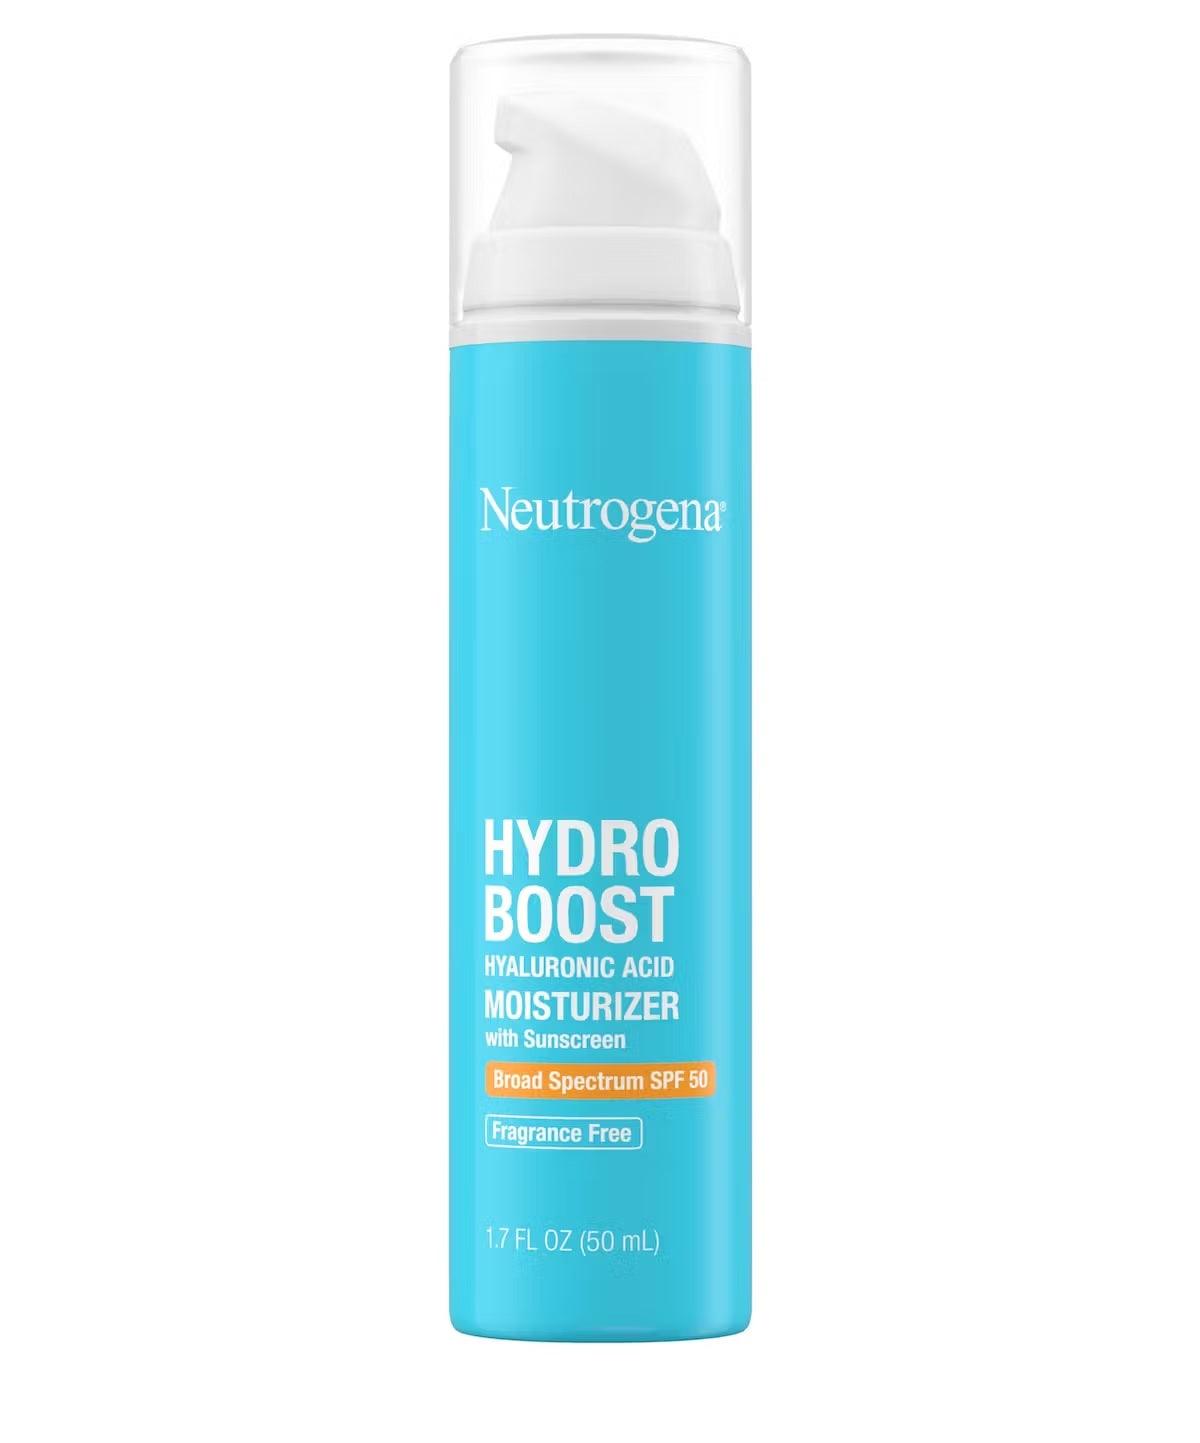 Neutrogena Hydro Boost Hydratant à l'Acide Hyaluronique SPF 50 - mondialpharma.com